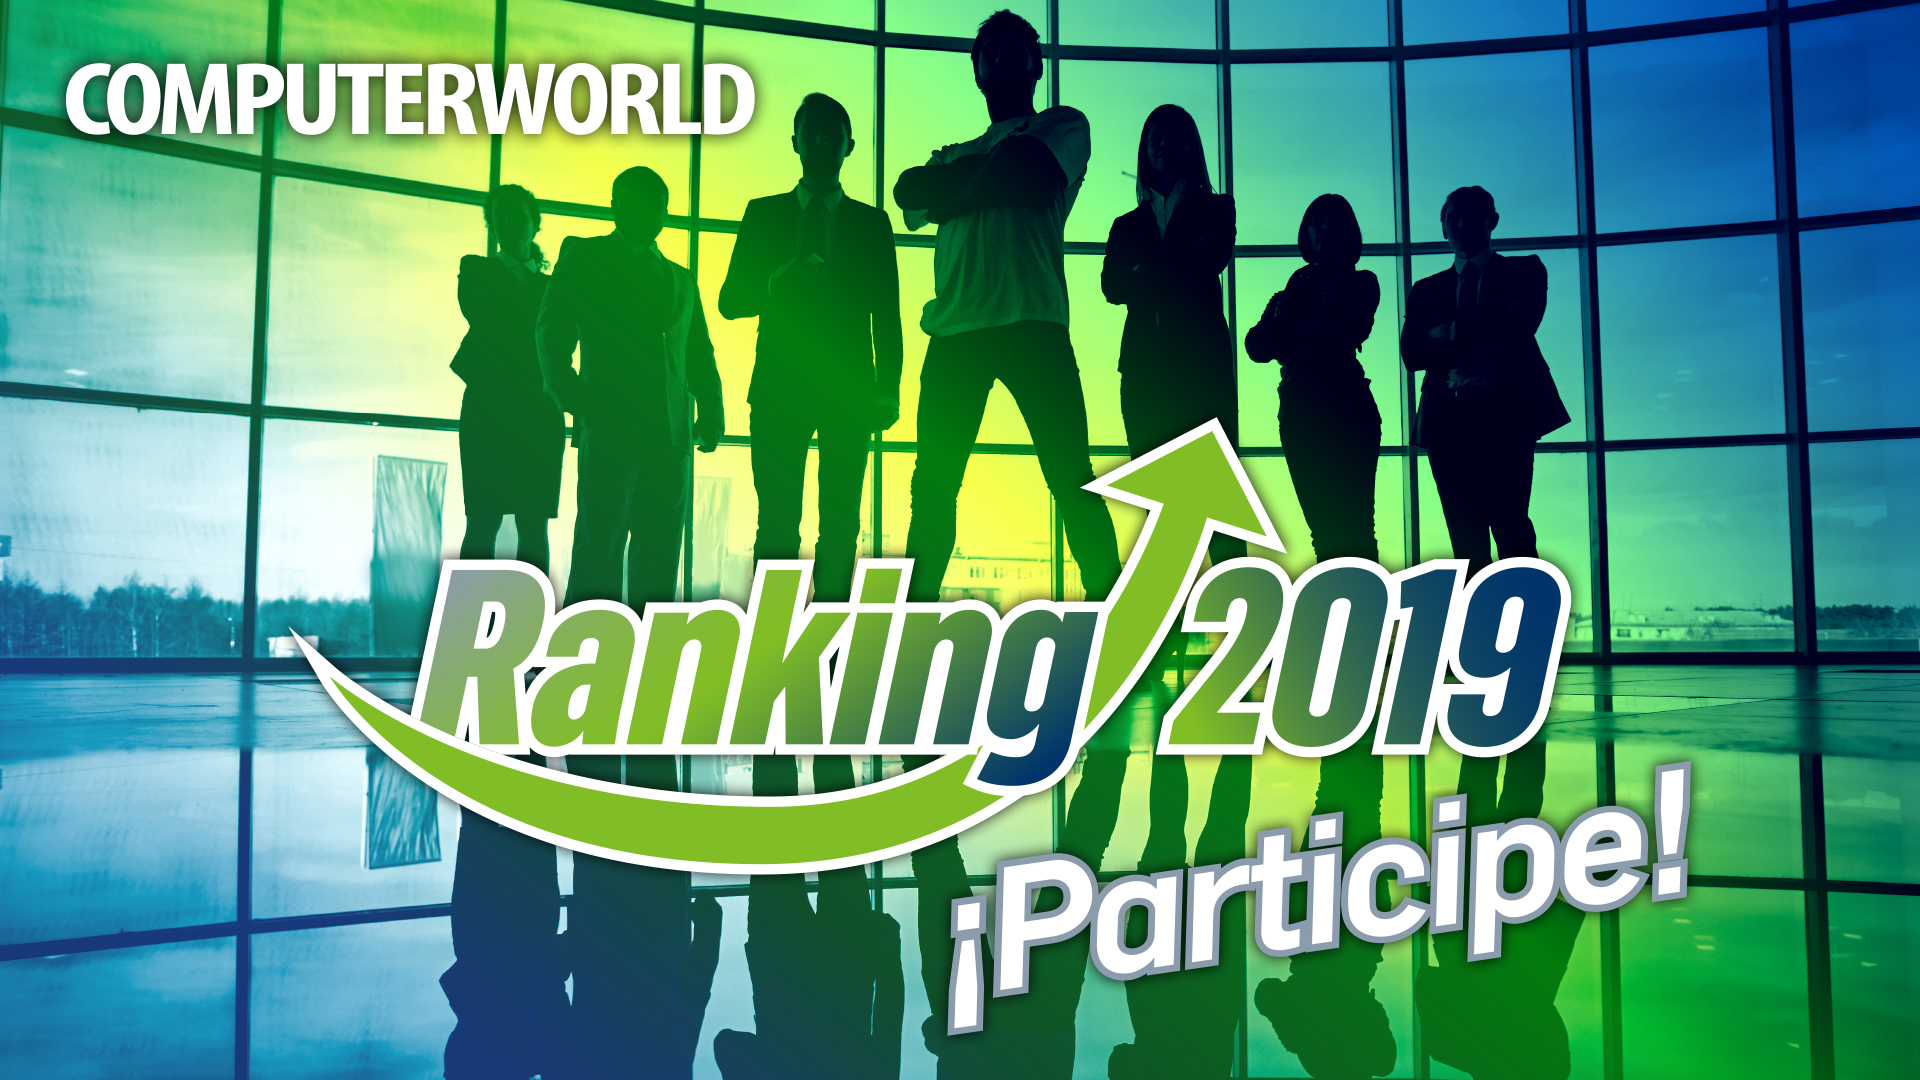 creatividad ranking computerworld 2019